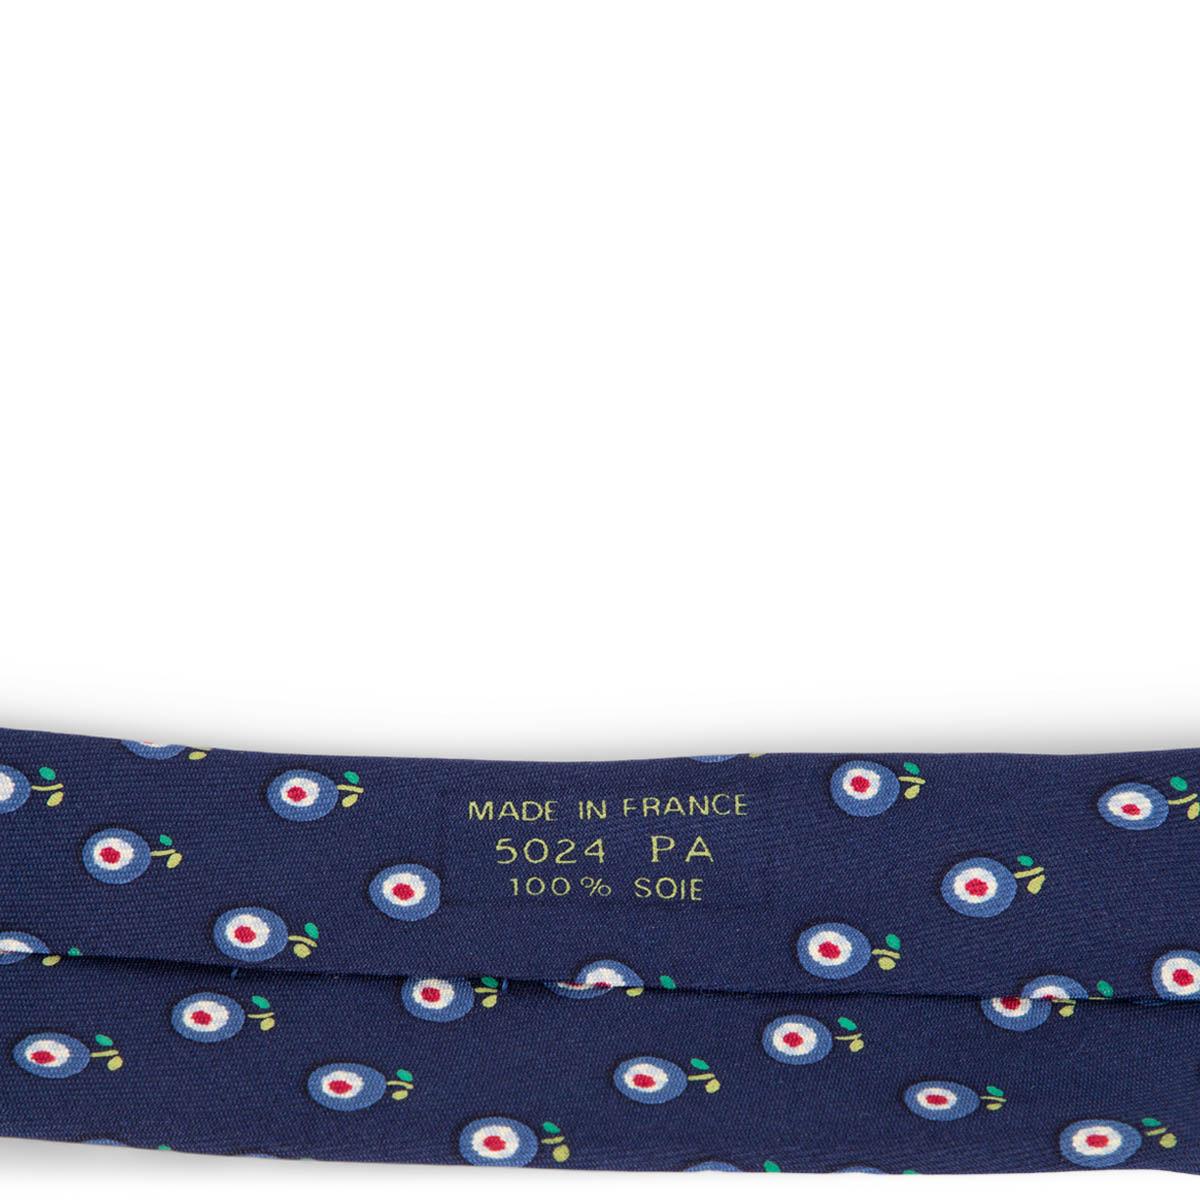 HERMES navy blue silk twill 5024 FLORAL Tie In Excellent Condition For Sale In Zürich, CH